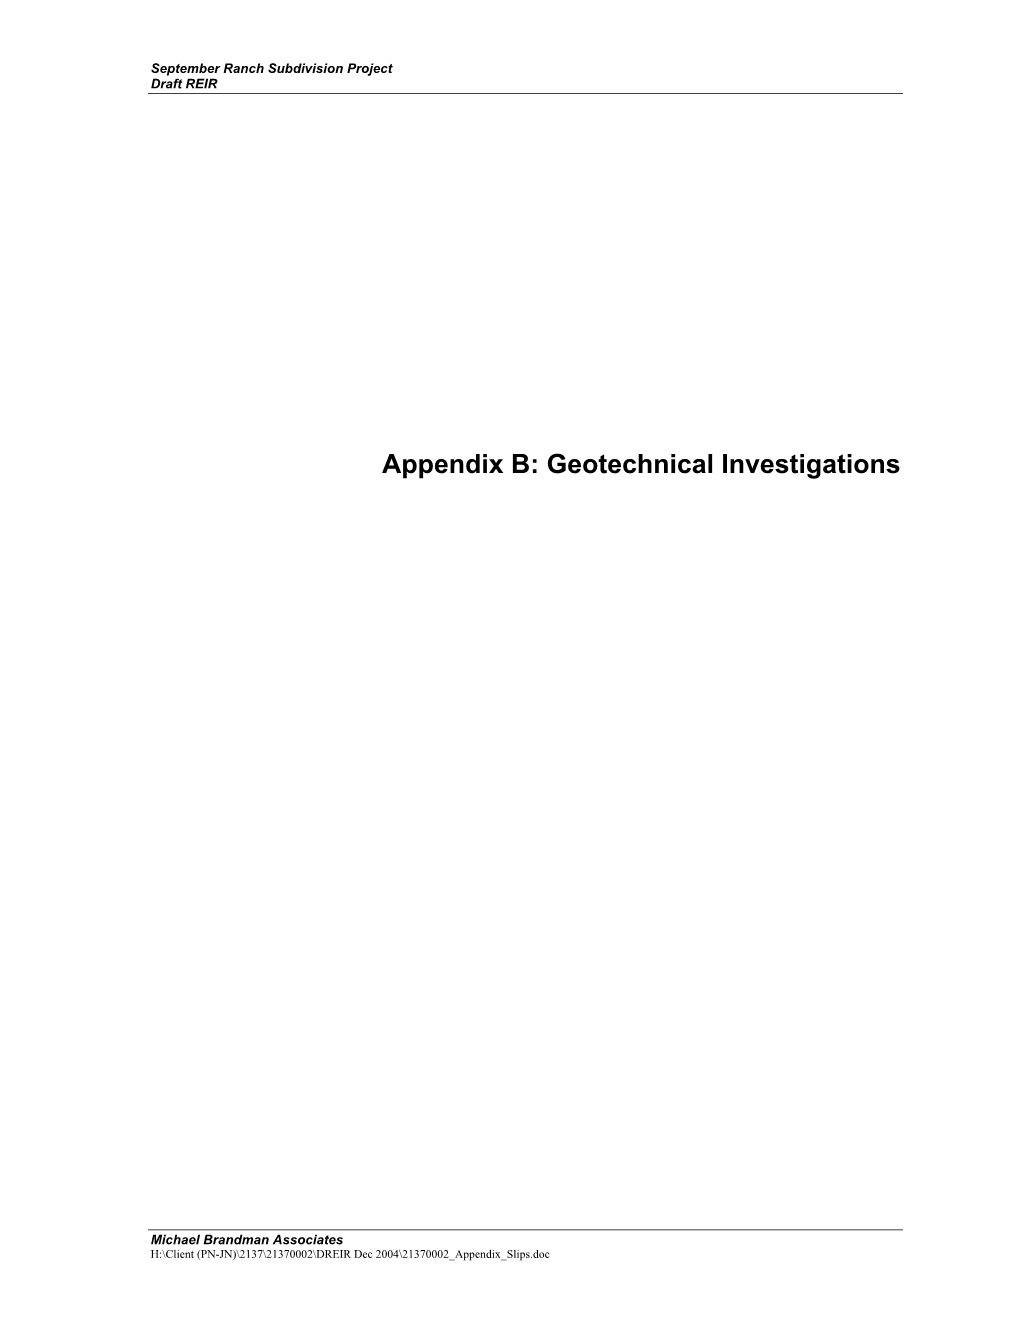 Appendix B: Geotechnical Investigations